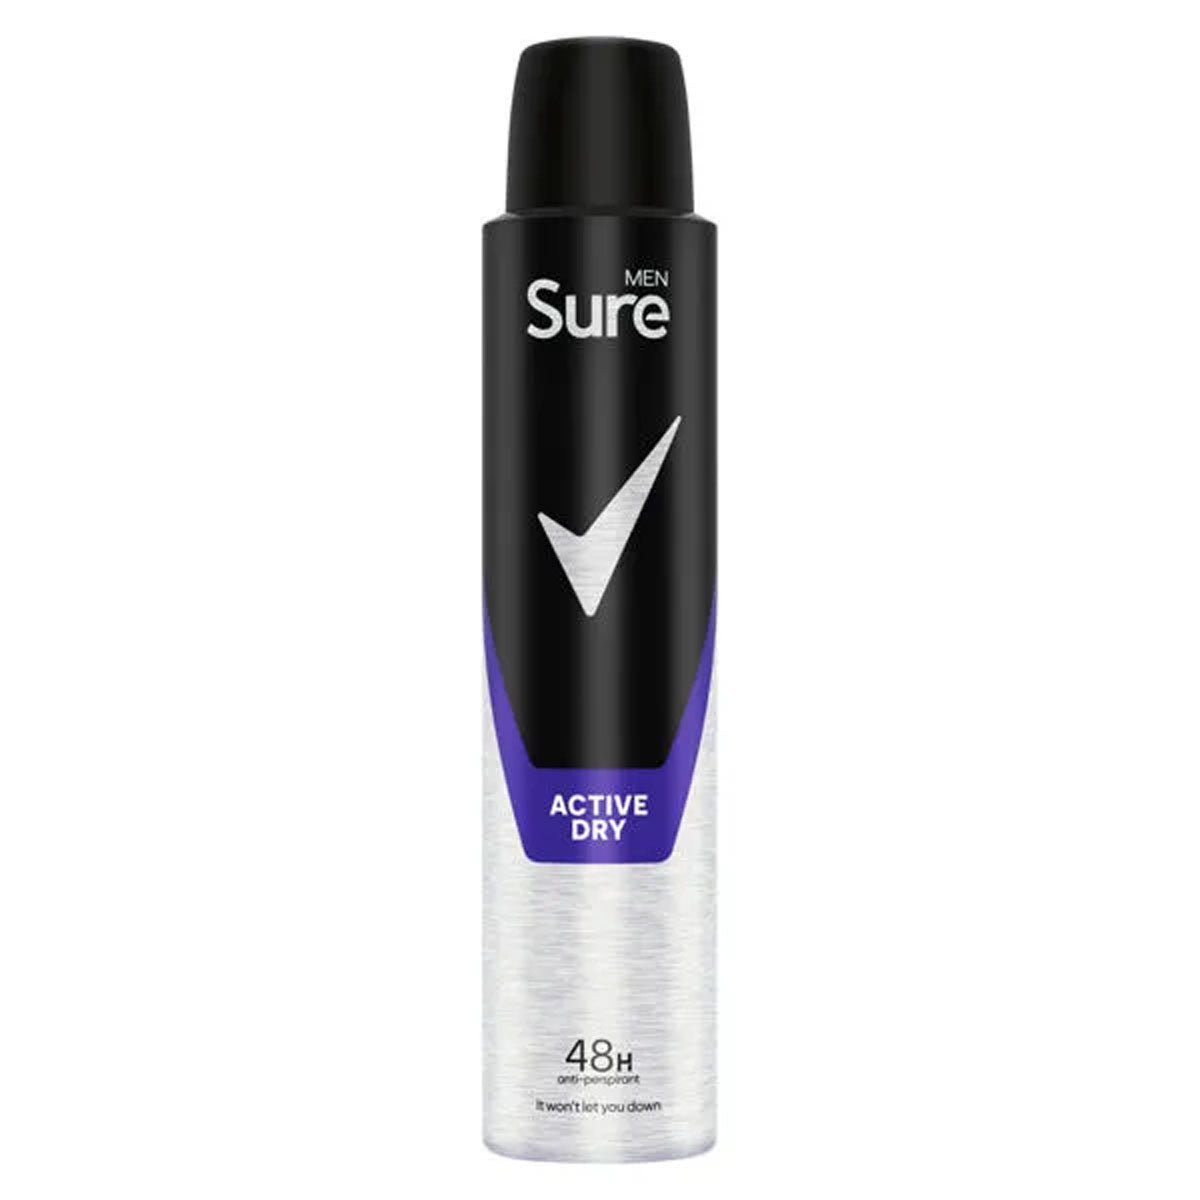 Sure - Men Anti Perspirant Aerosol Active Dry - 200ml deodorant for men.